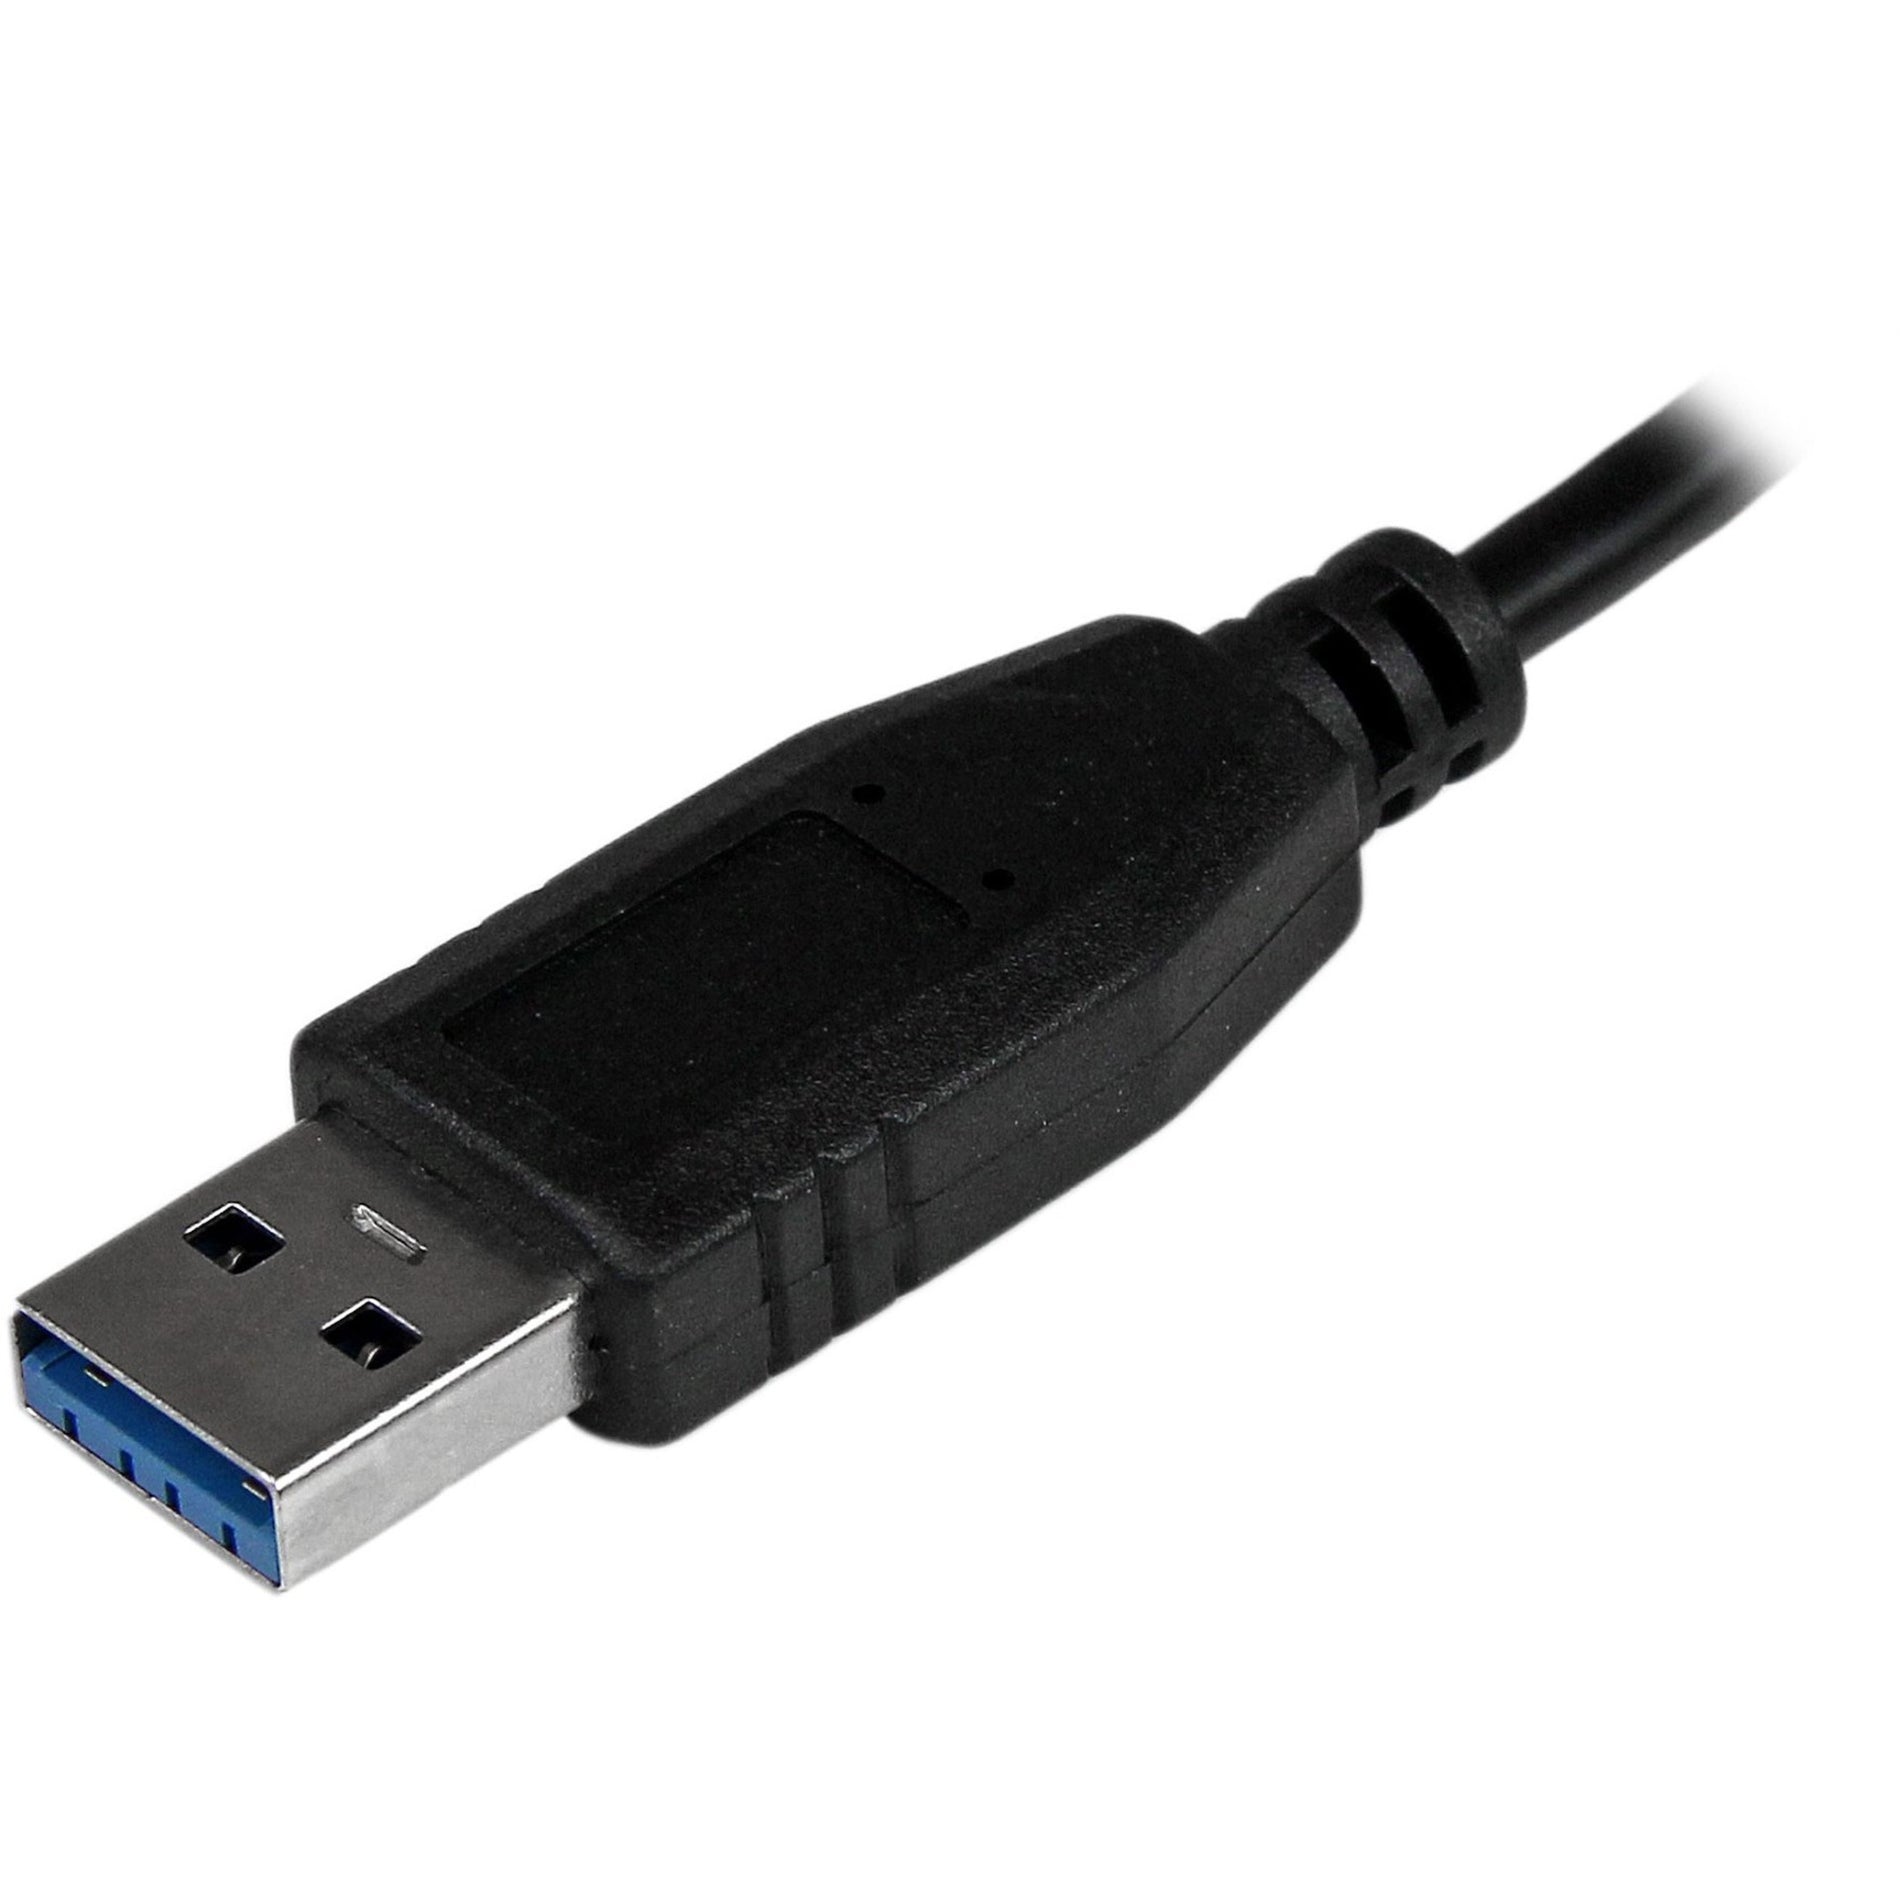 StarTech.com ST4300MINU3B Portable 4 Port SuperSpeed Mini USB 3.0 Hub - Black, 2 Year Warranty, Mac/PC Compatible, Lightweight Design